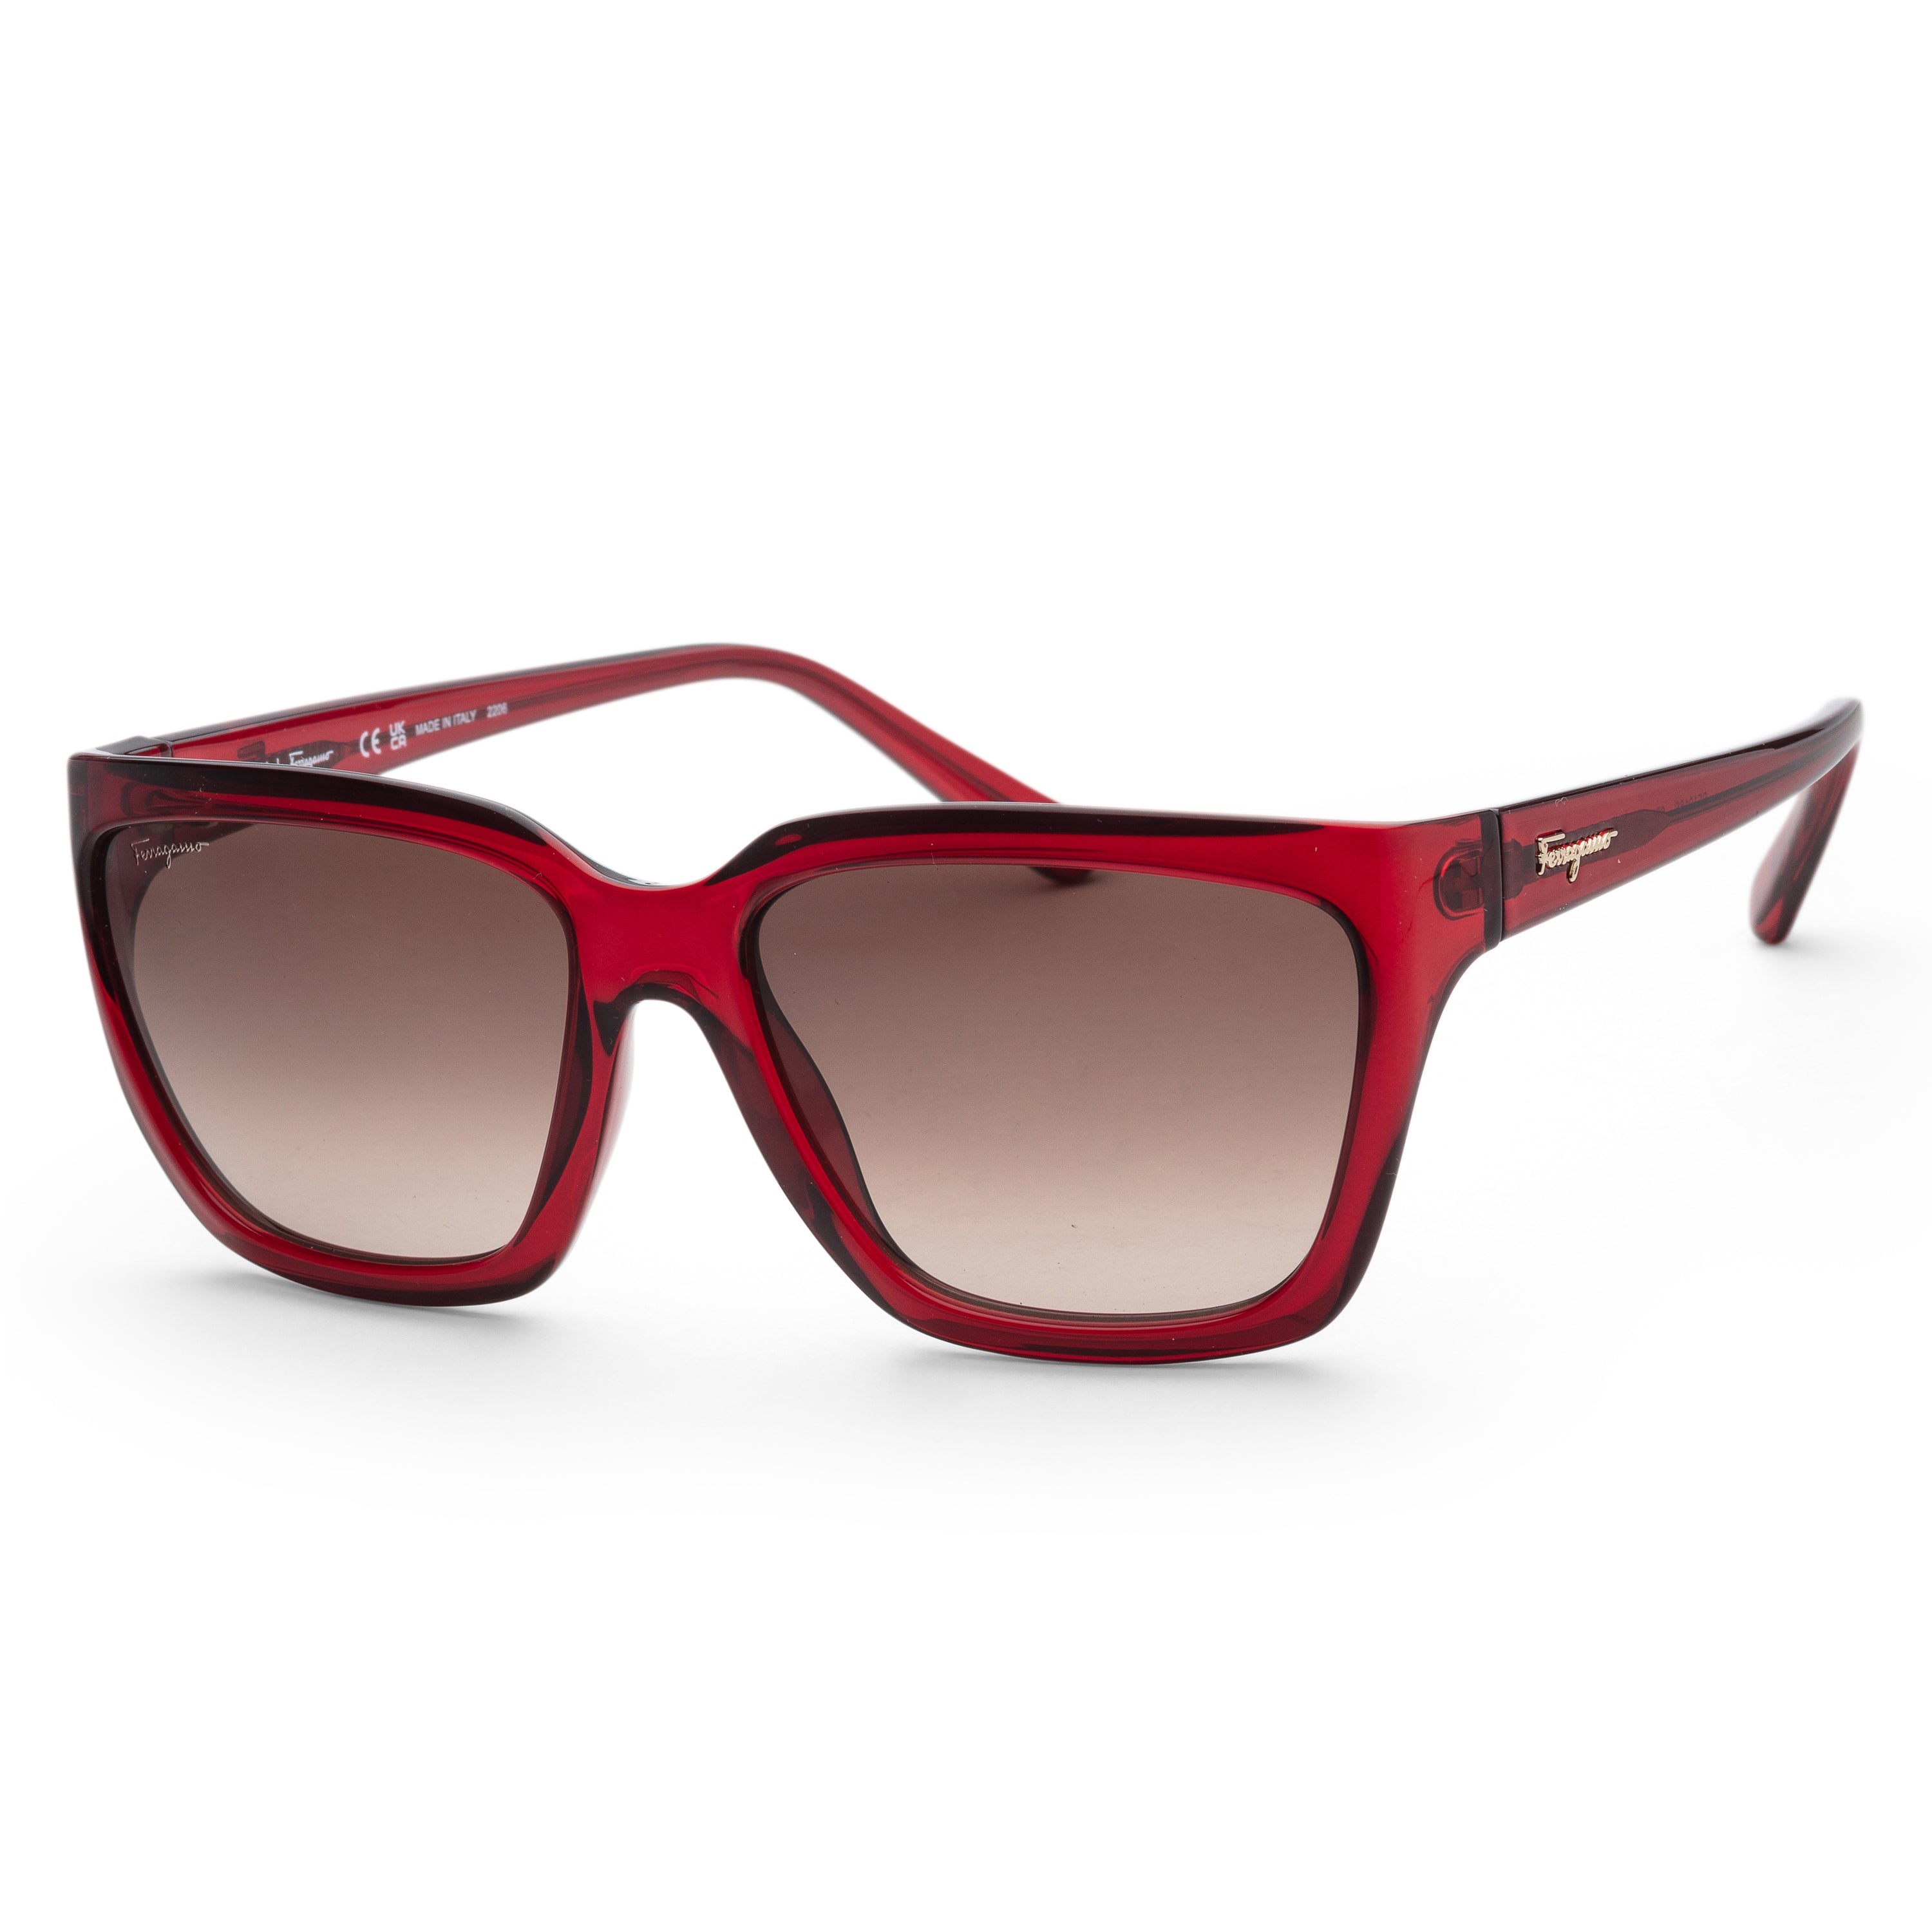 title:Ferragamo Women's SF1018S-655 Fashion 59mm Crystal Wine Sunglasses;color:Crystal Wine